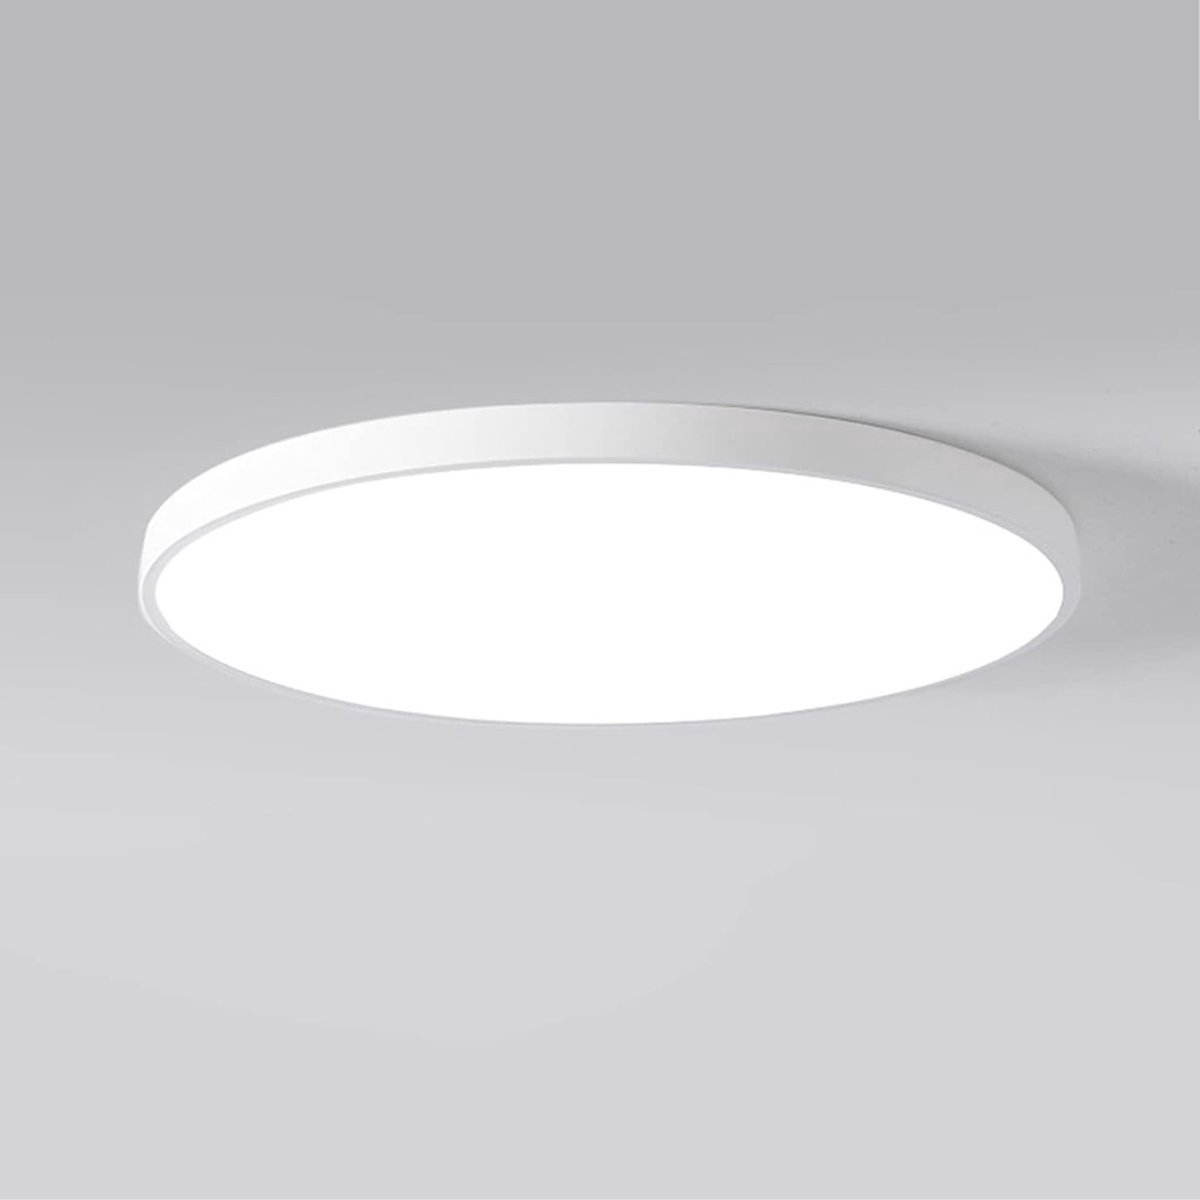 Badkamerlamp Plafond - Plafondlamp Badkamer - Plafonniere Slaapkamer - Badkamerverlichting LED Dimbaar - 18W